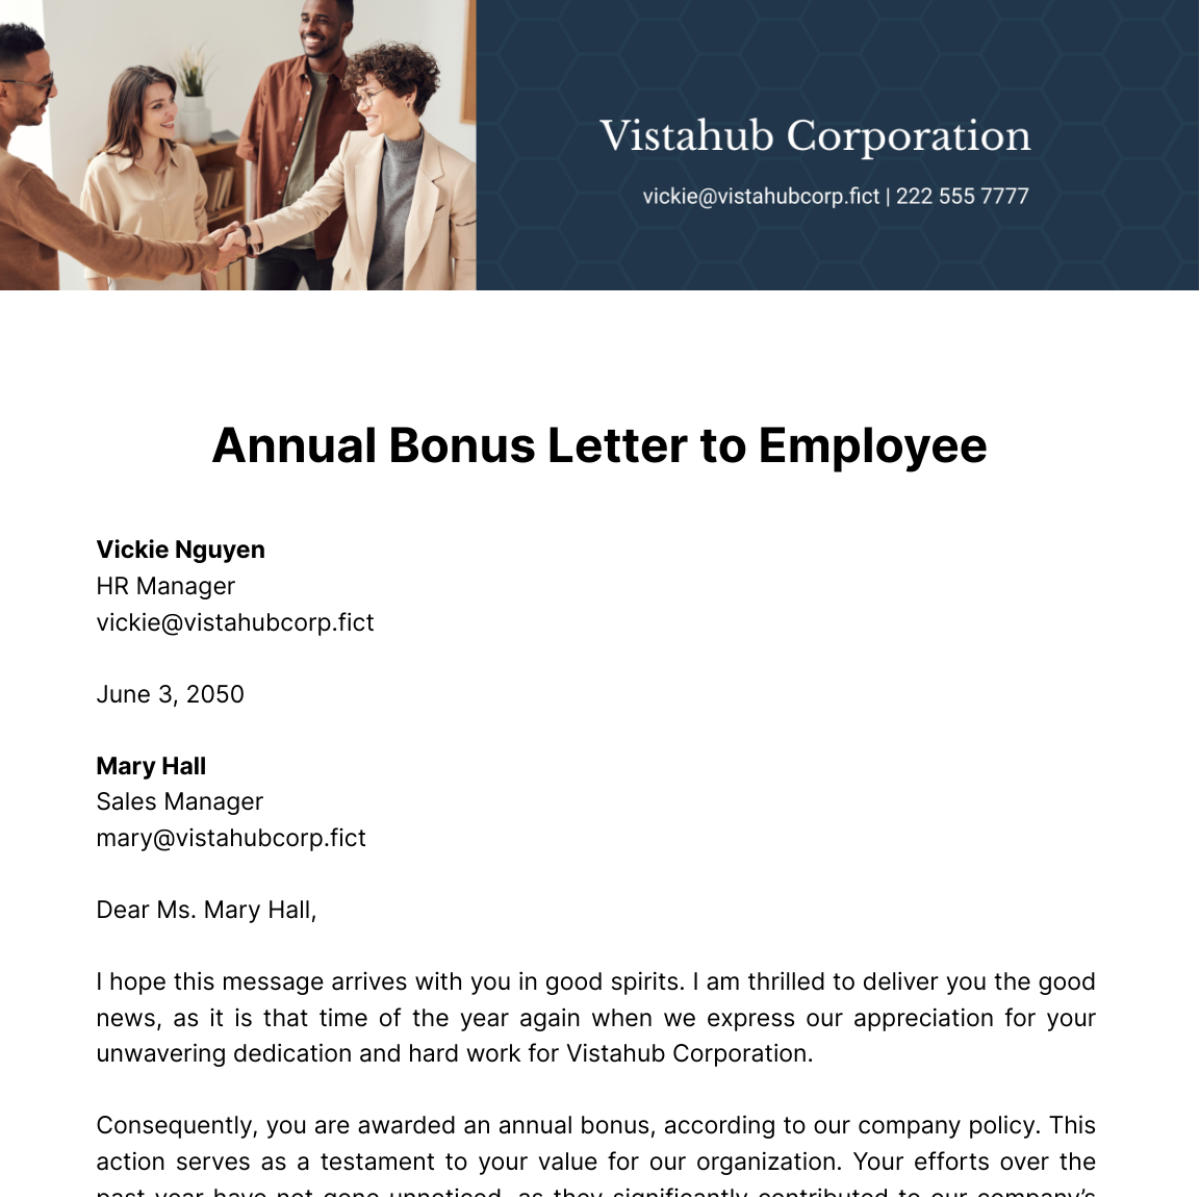 Annual Bonus Letter to Employee Template